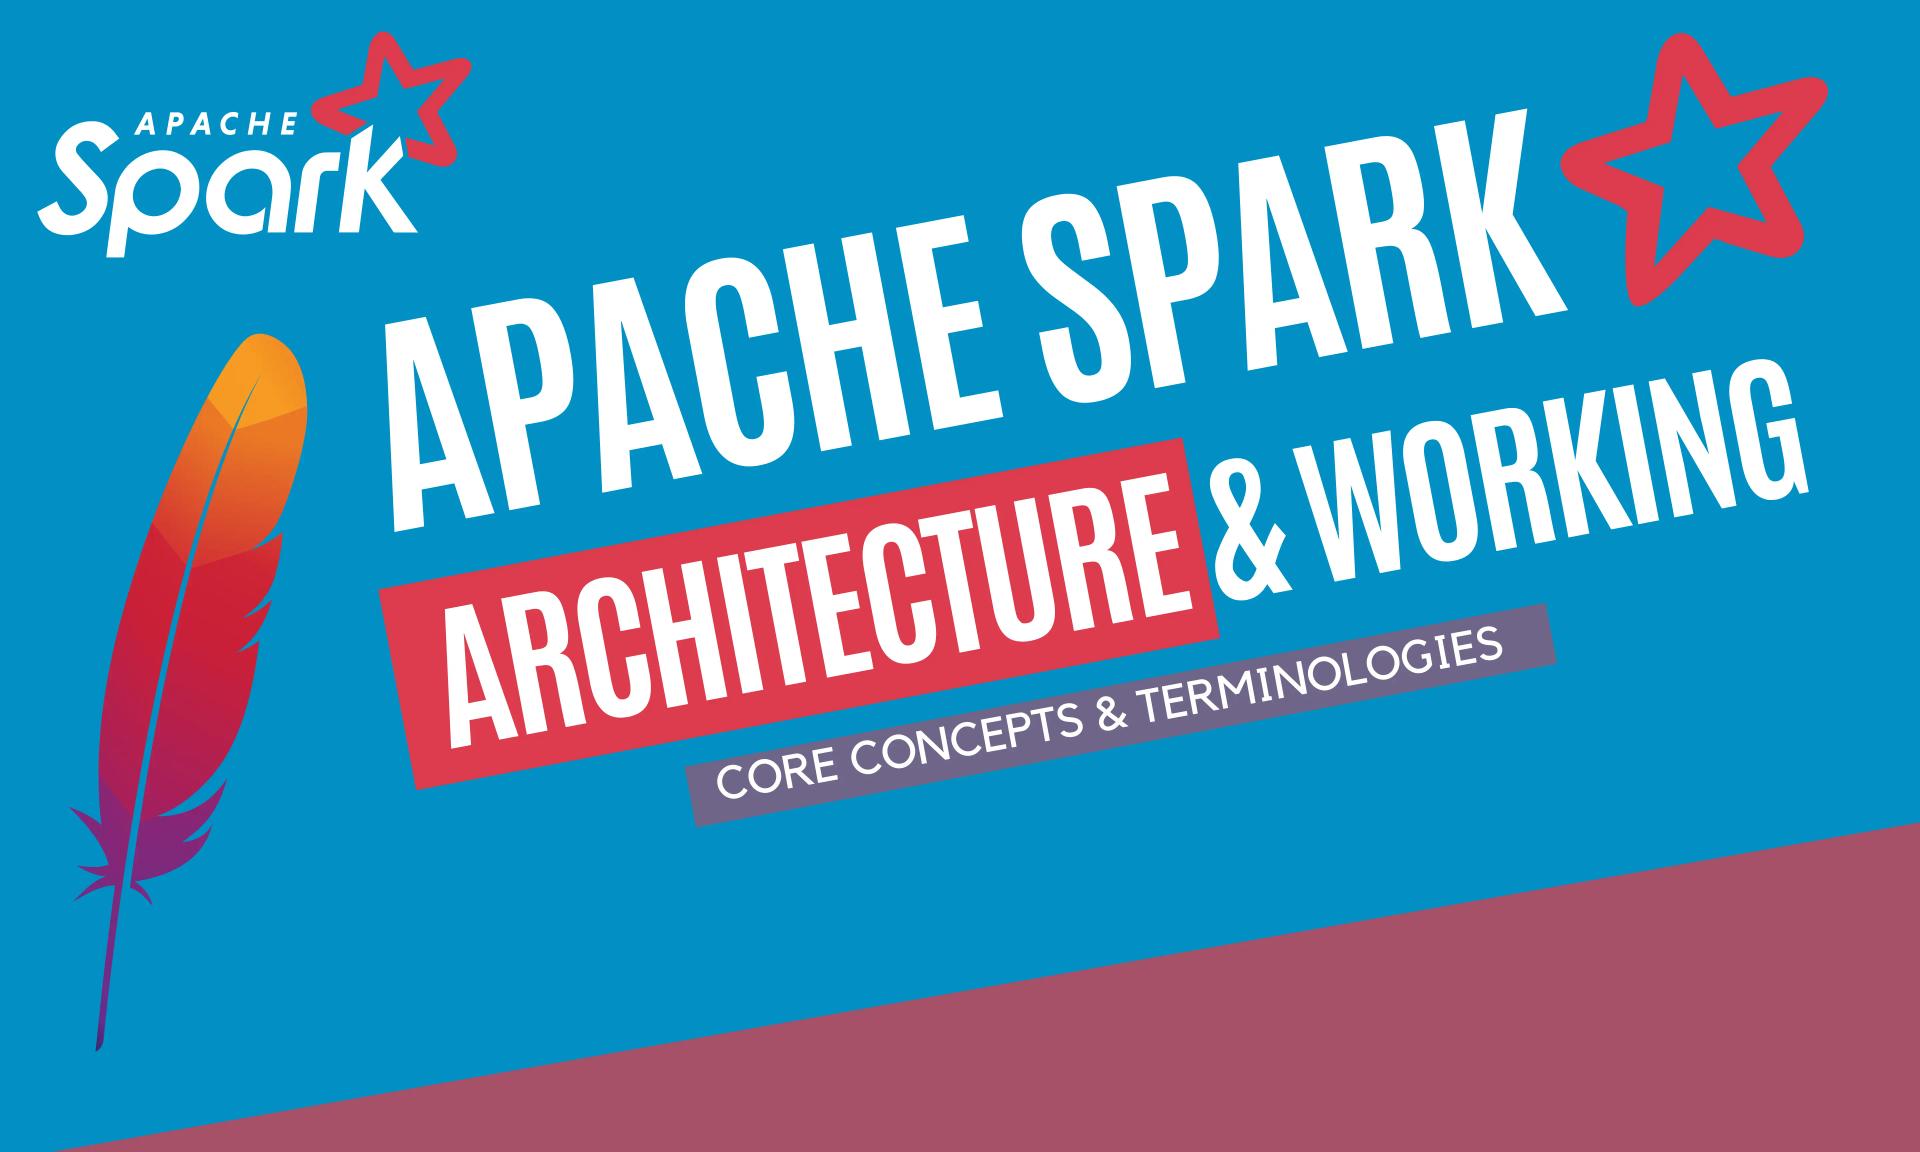 Apache Spark Architecture, Working & Terminologies